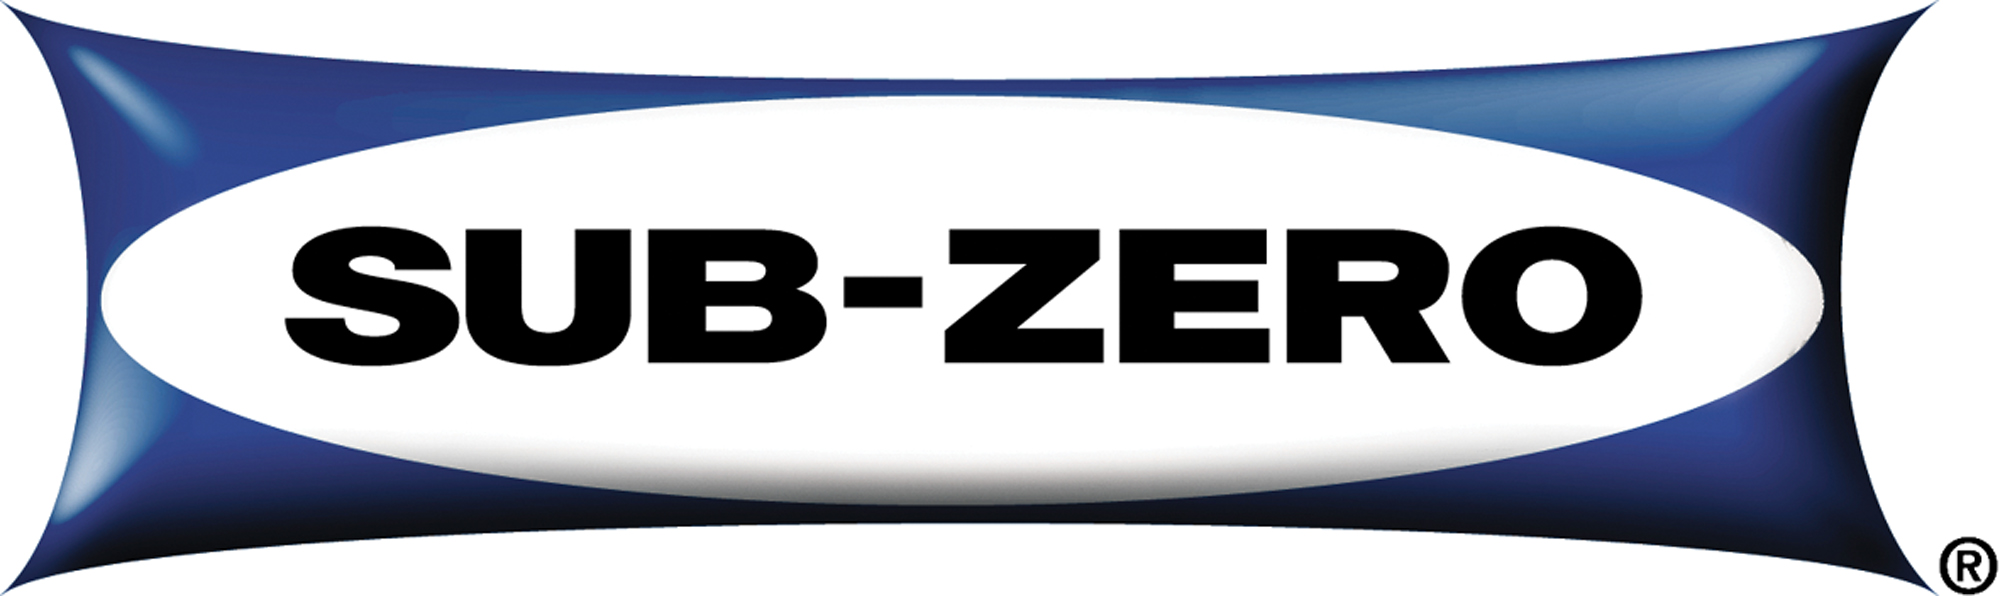 Sub-Zero Refrigerators logo